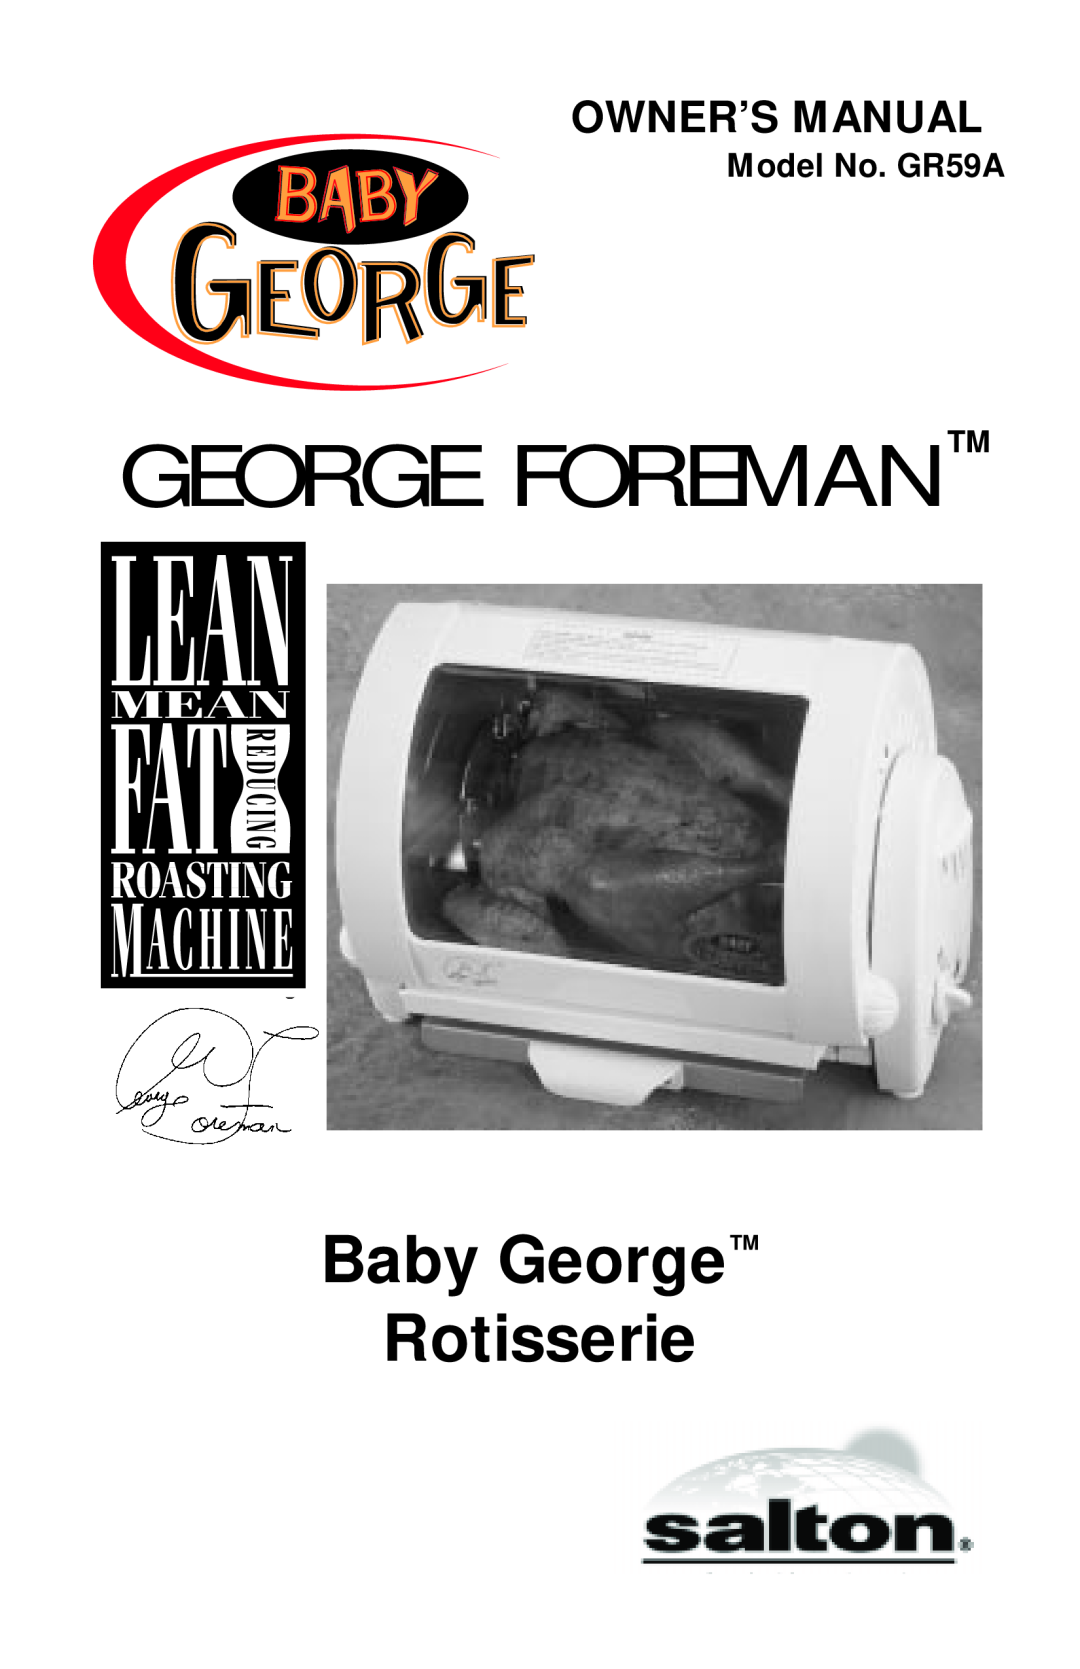 Salton owner manual Baby George Rotisserie, Model No. GR59A, George Foreman Tm 